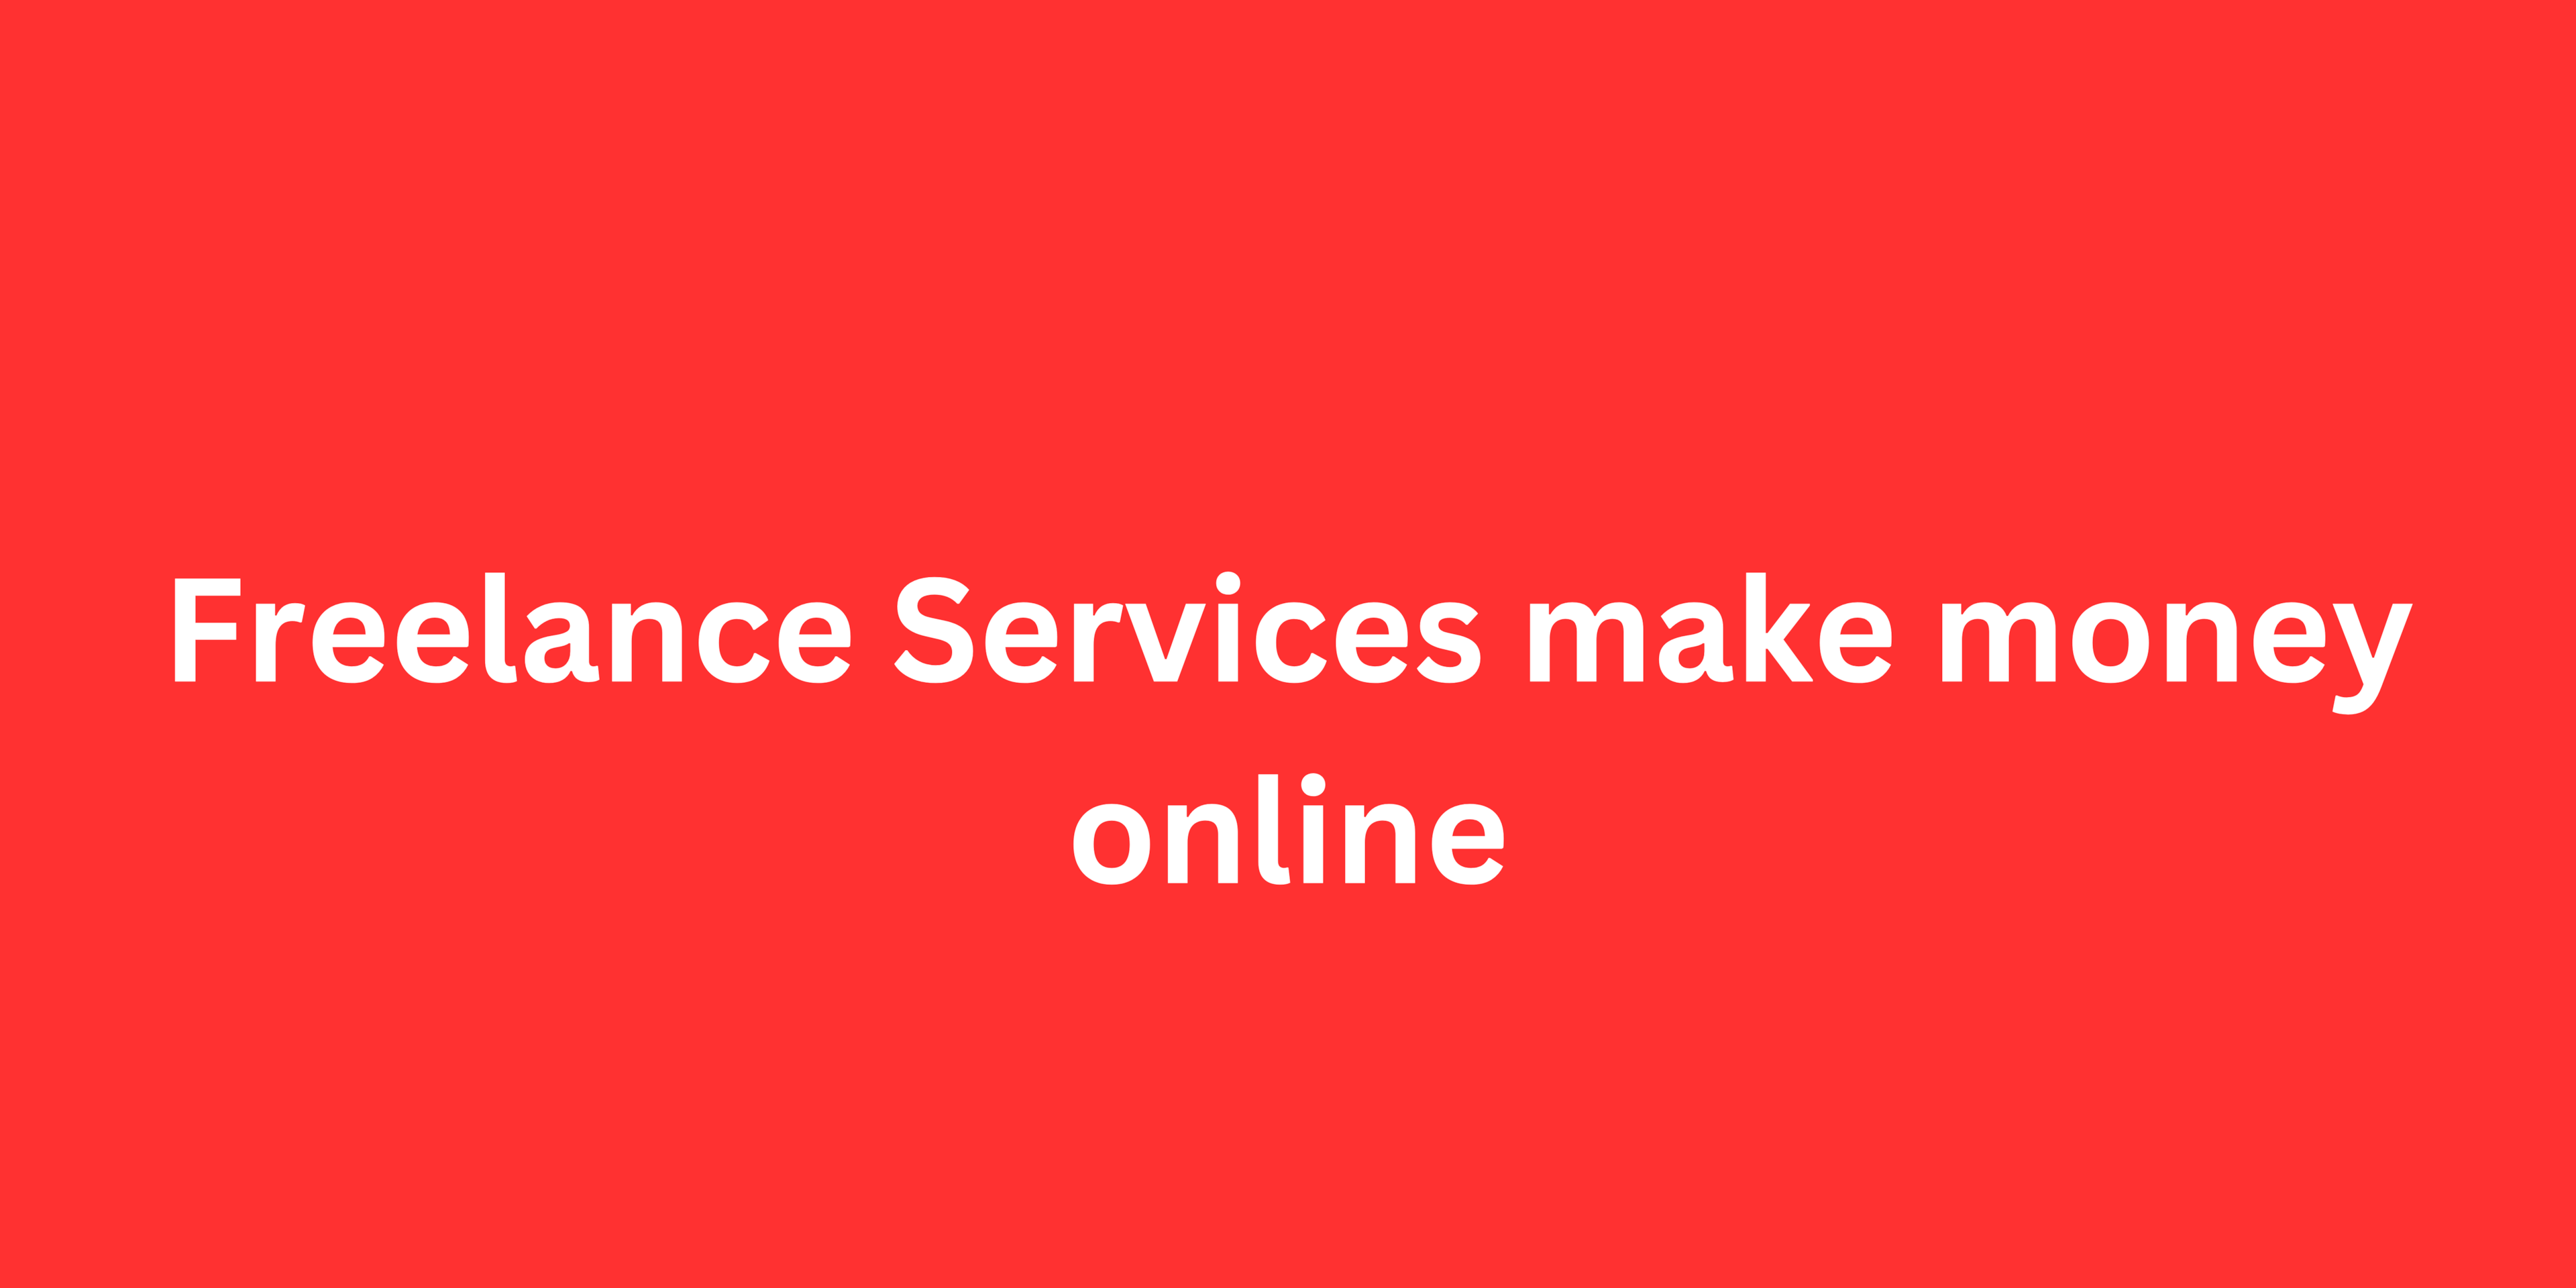 Freelance Services make money online